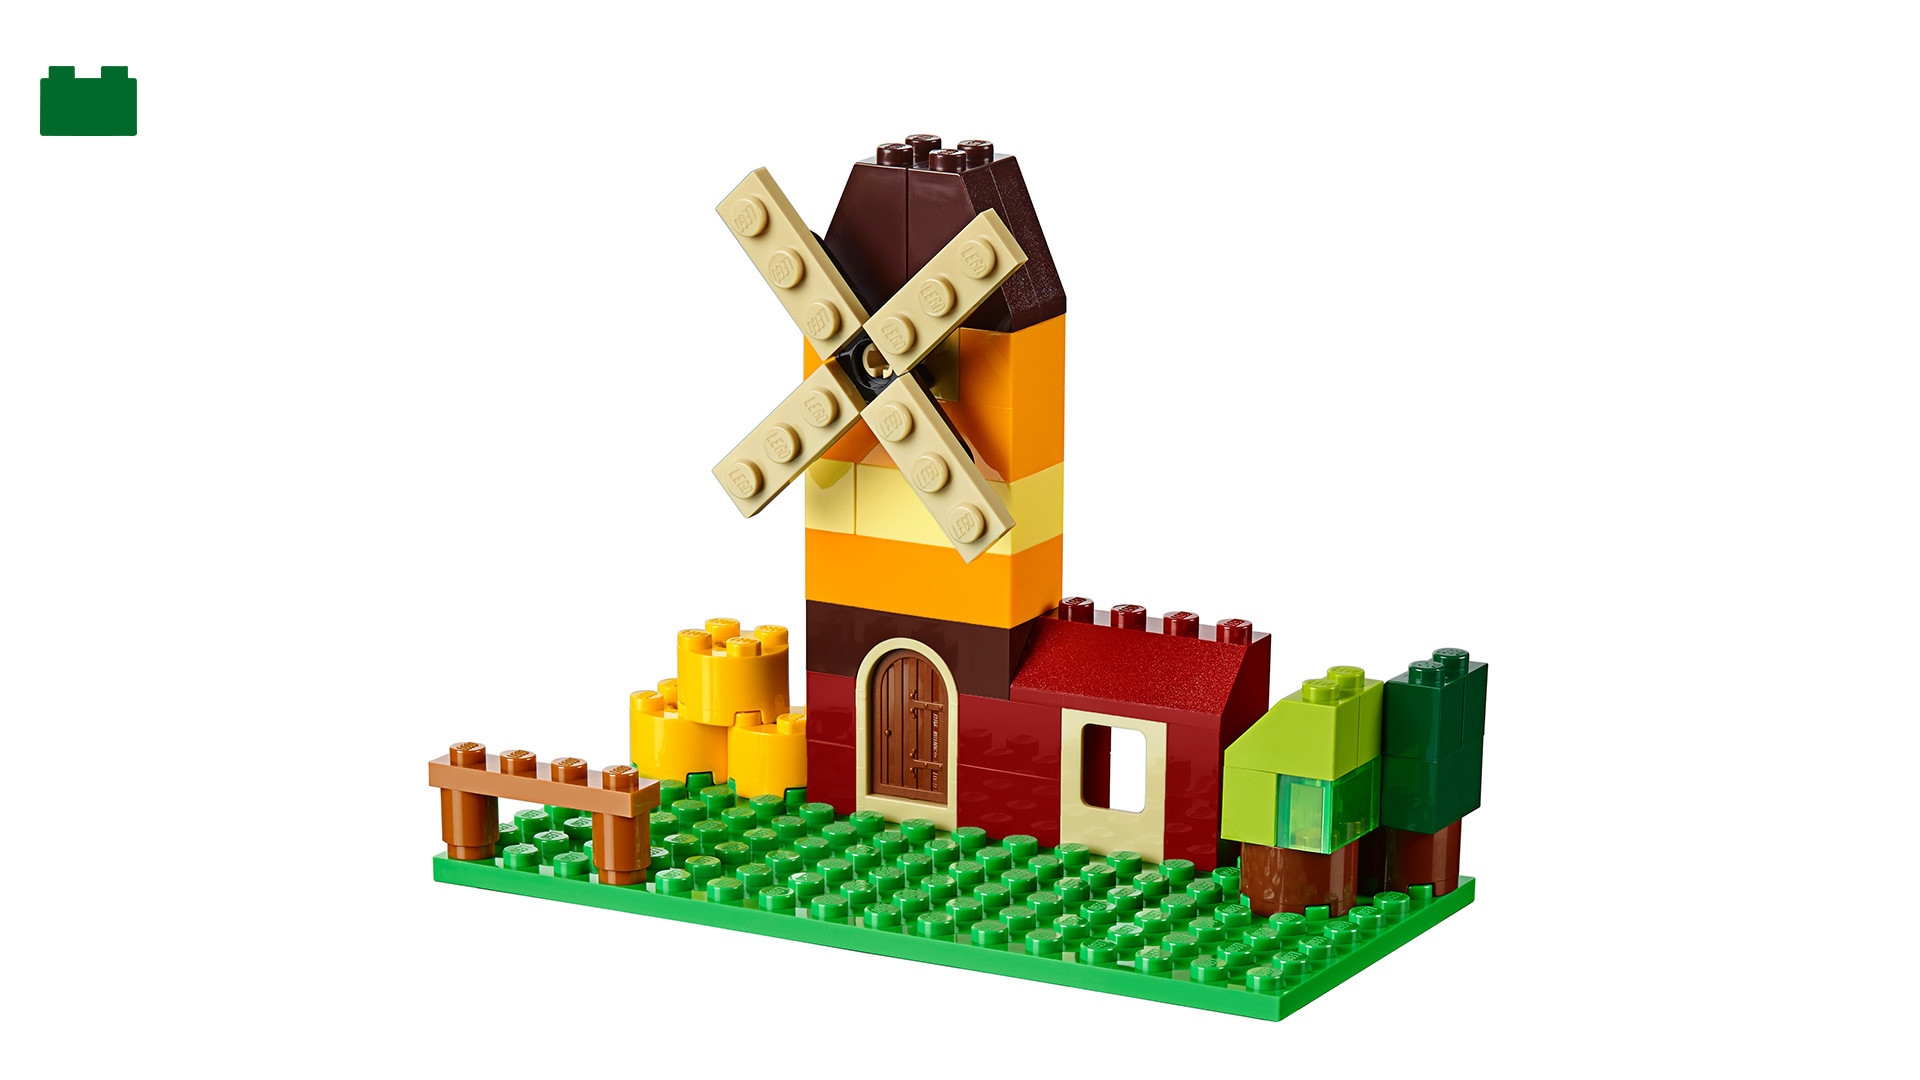 lego classic 10696 building ideas